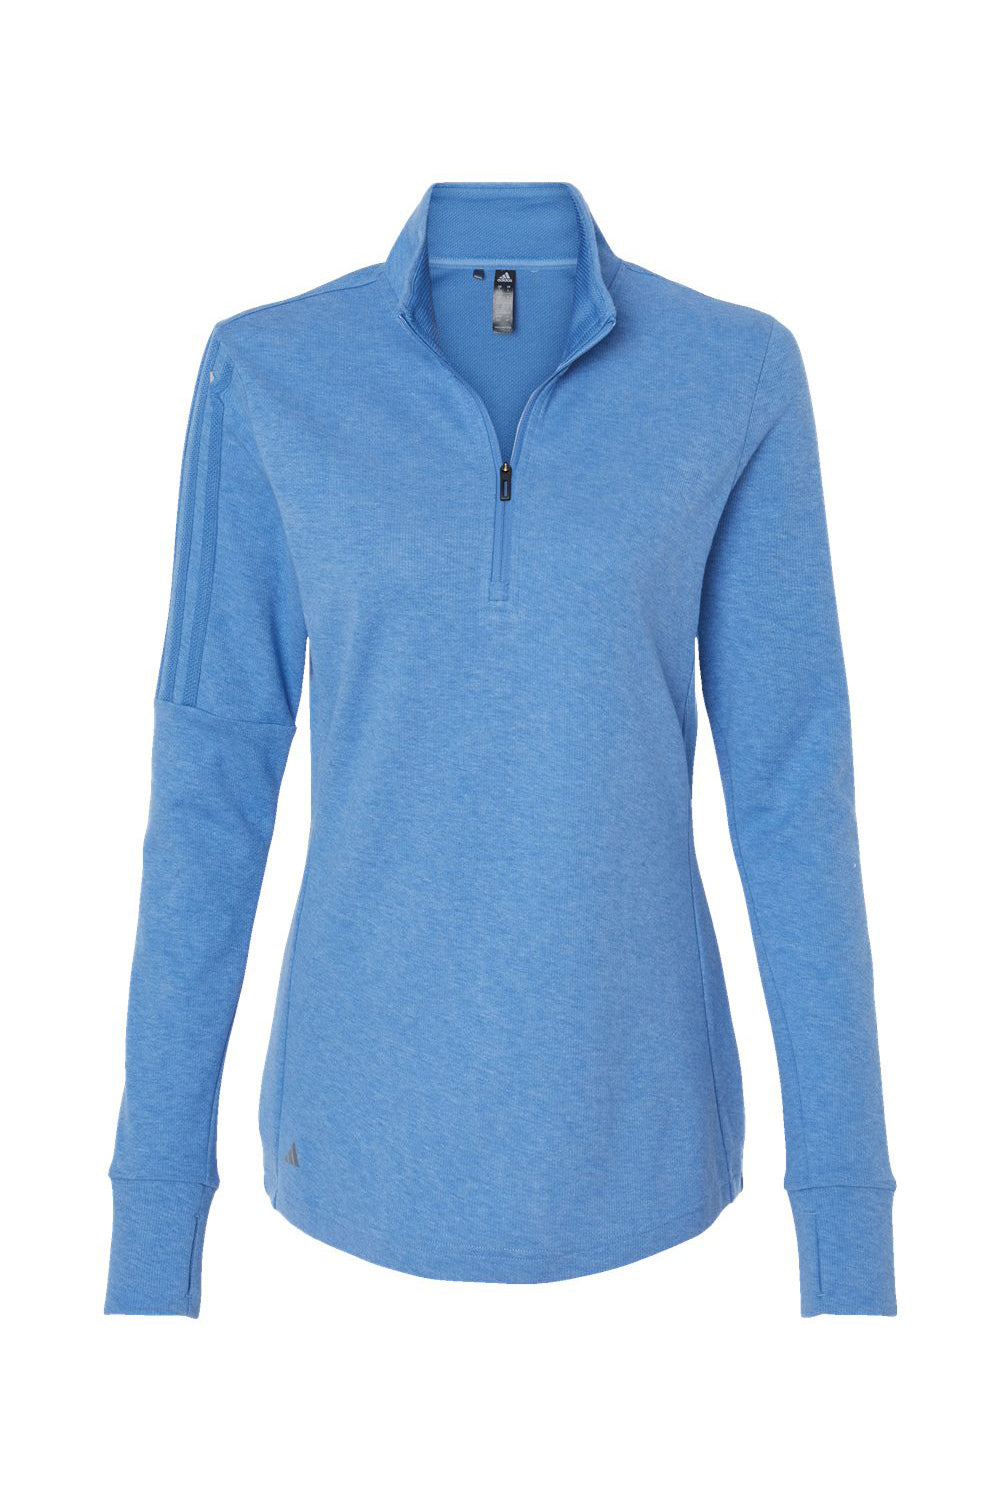 Adidas A555 Womens 3 Stripes 1/4 Zip Sweater Focus Blue Melange Flat Front